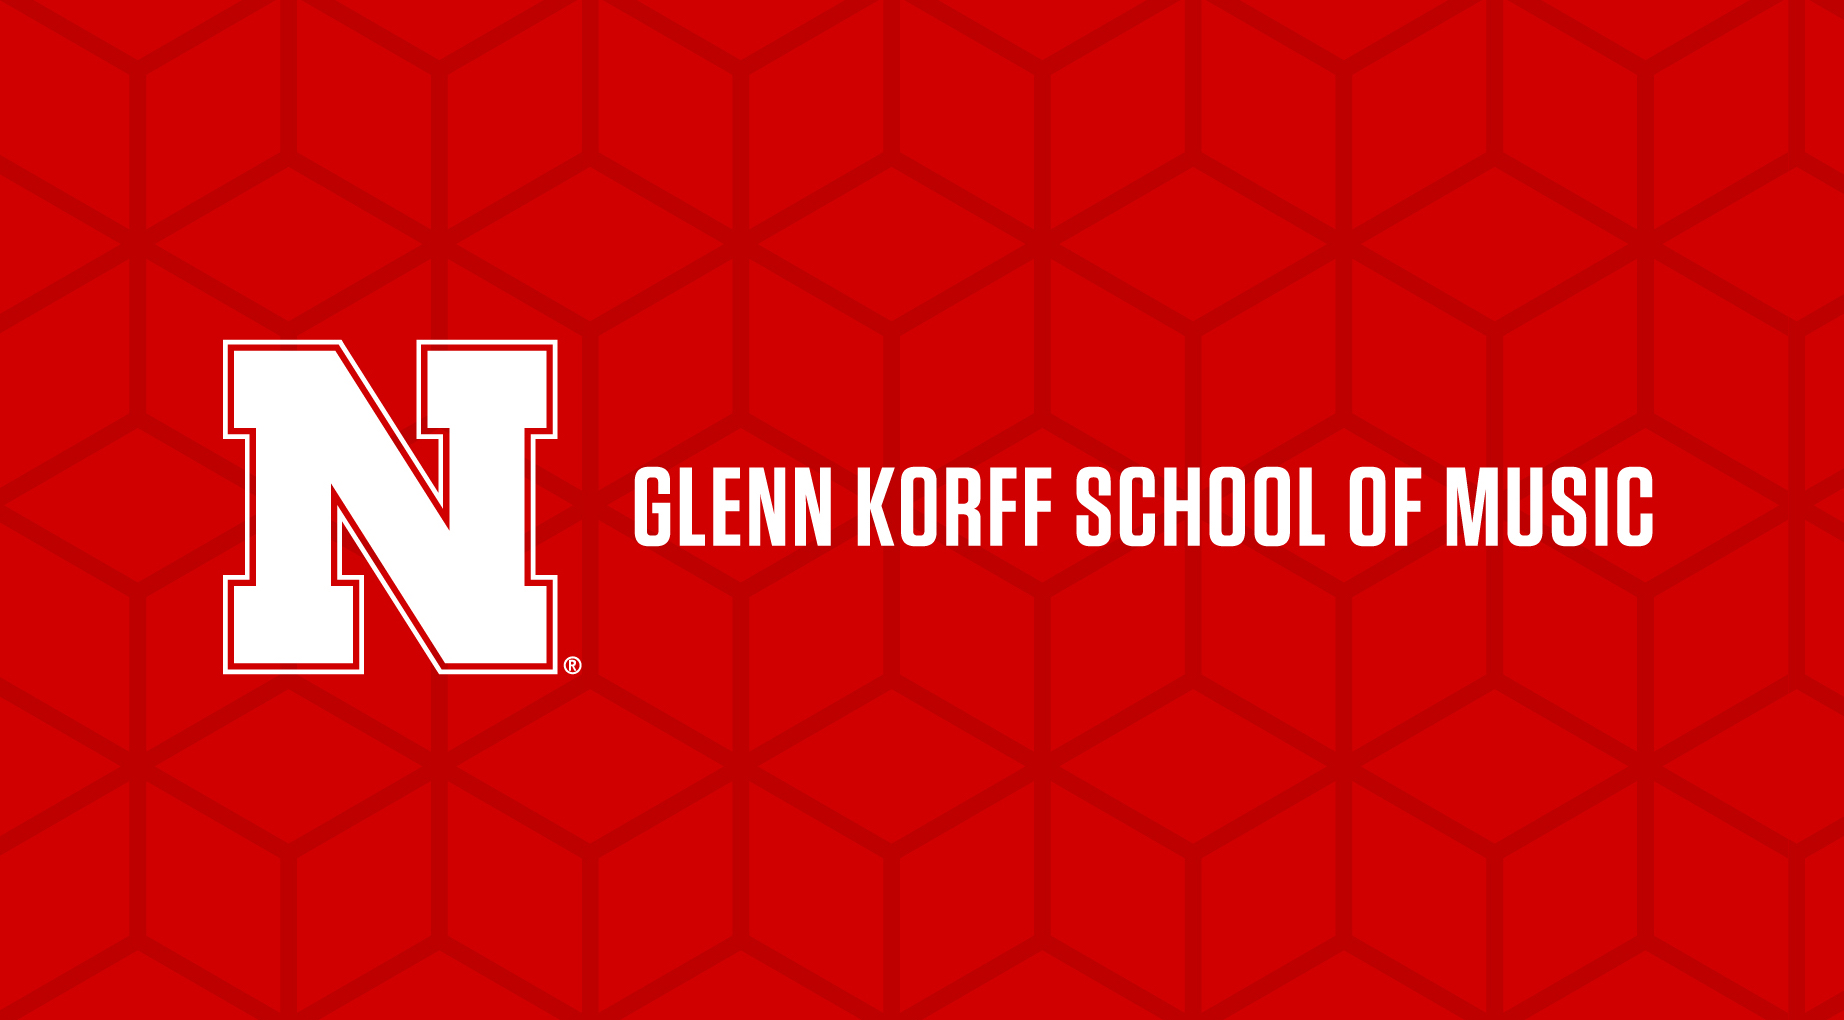 Glenn Korff School of Music